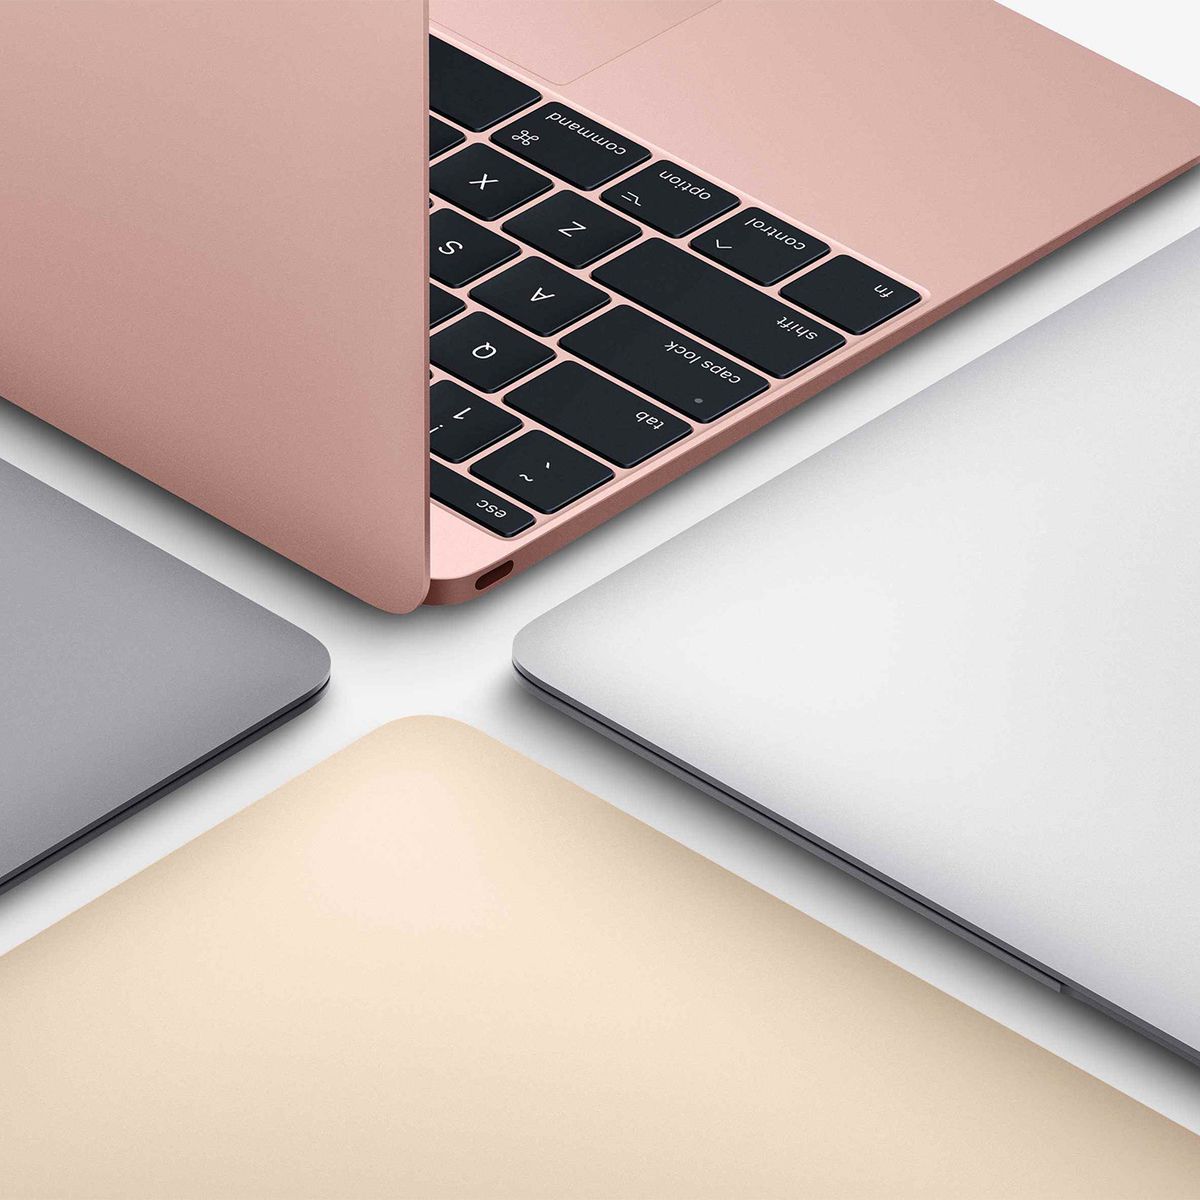 Apple's Rumored 12-Inch MacBook: What We Know - MacRumors